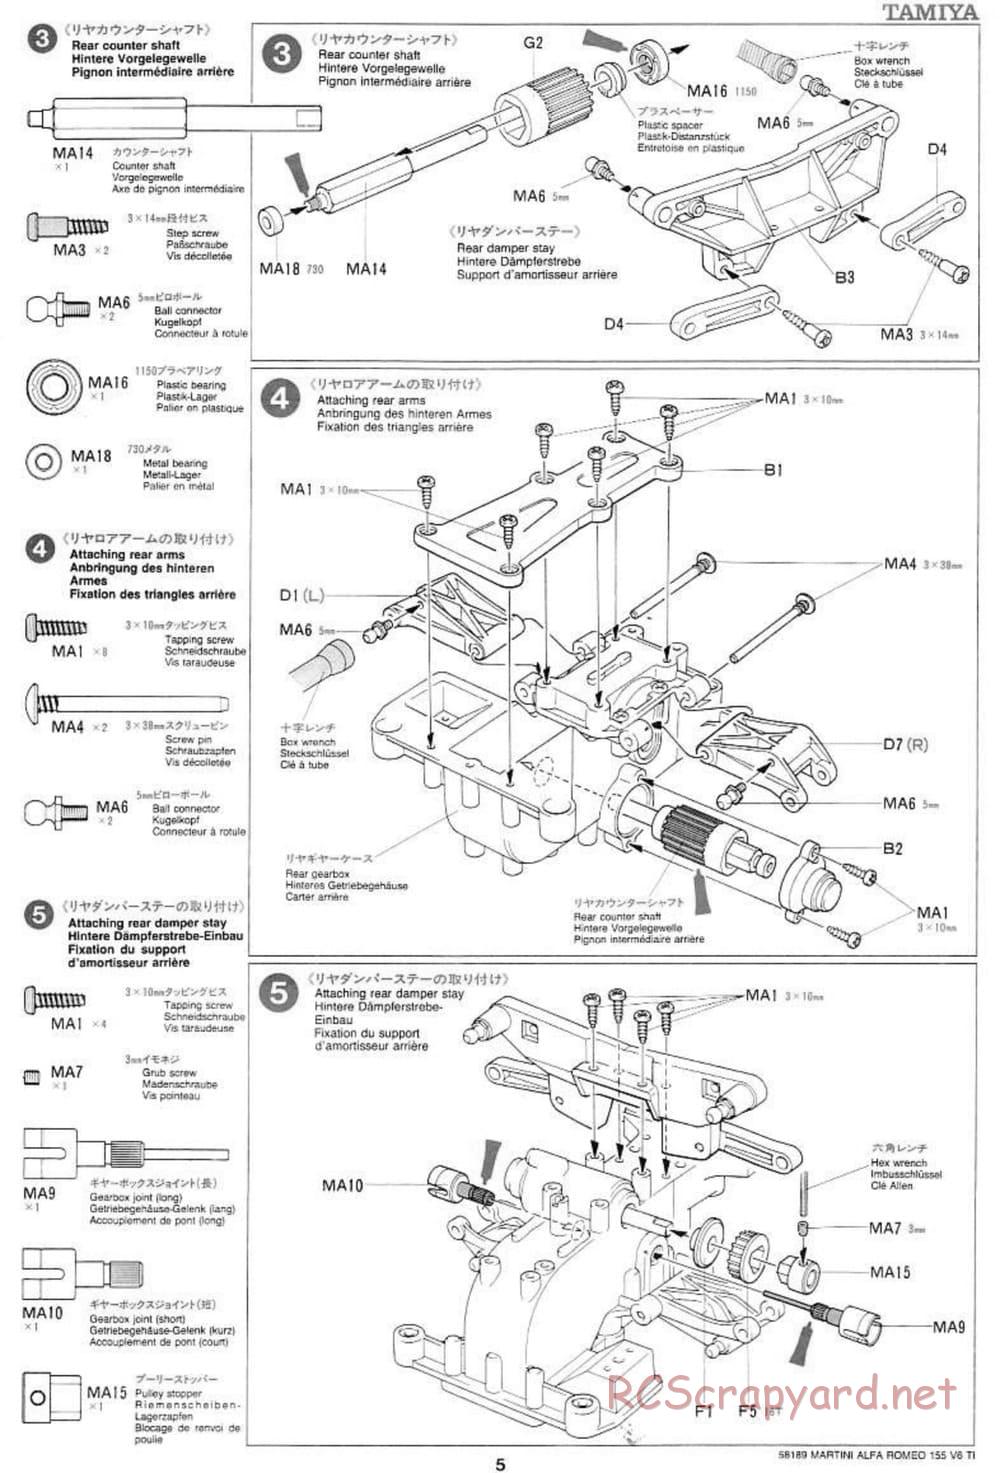 Tamiya - Martini Alfa Romeo 155 V6 TI - TA-03F Chassis - Manual - Page 5